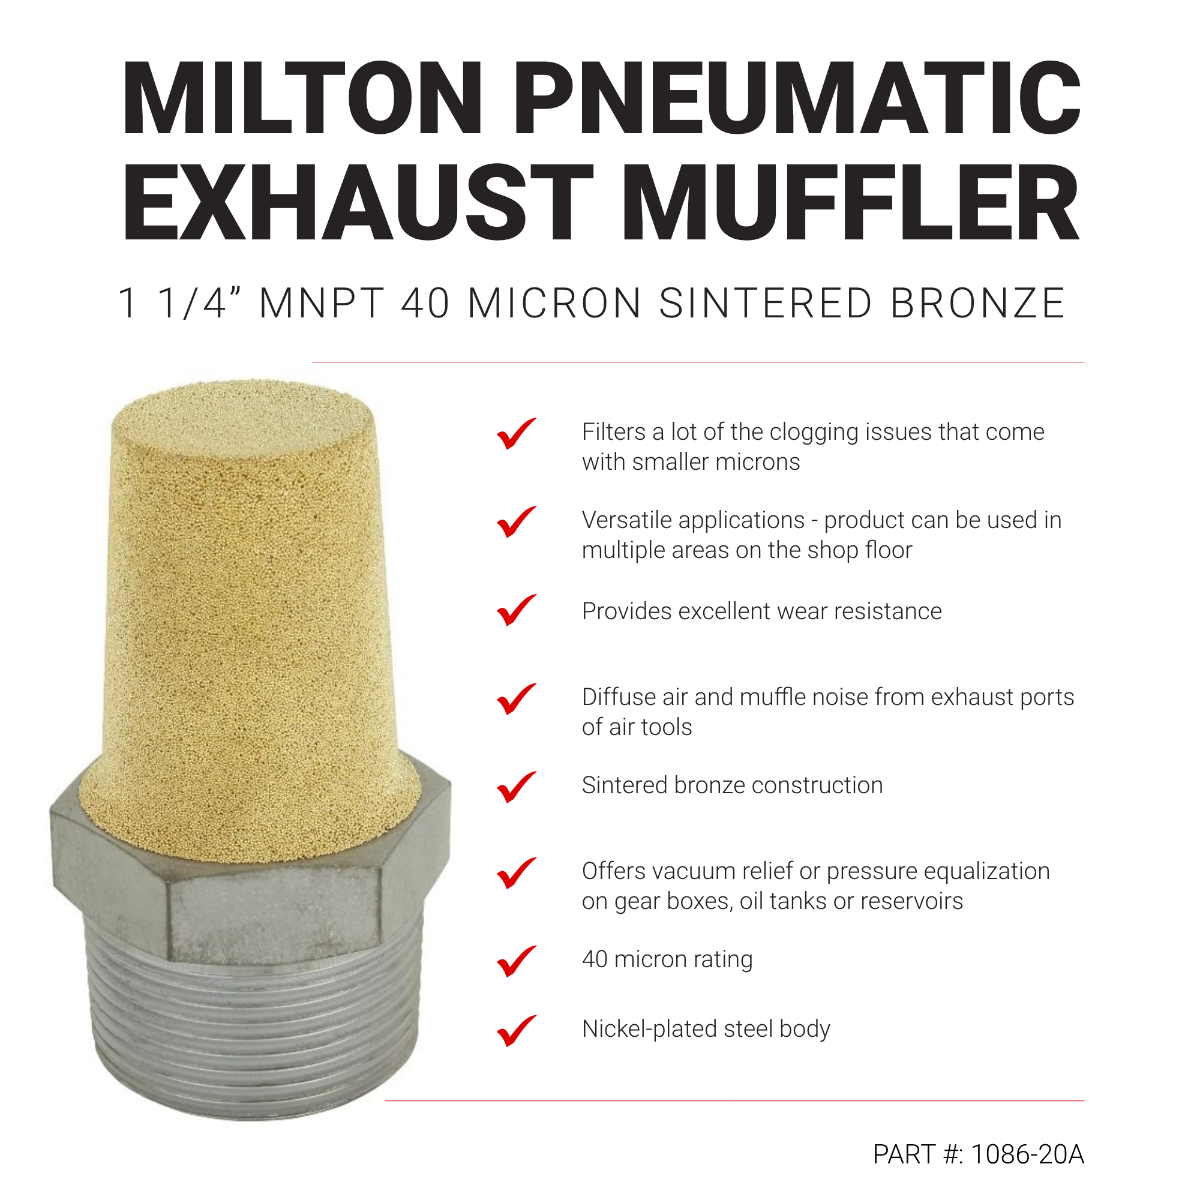 Pneumatic Exhaust Muffler, 1 1/4” MNPT 40 Micron Sintered Bronze Silencer/Diffuse air & Noise Reducer - Box of 25